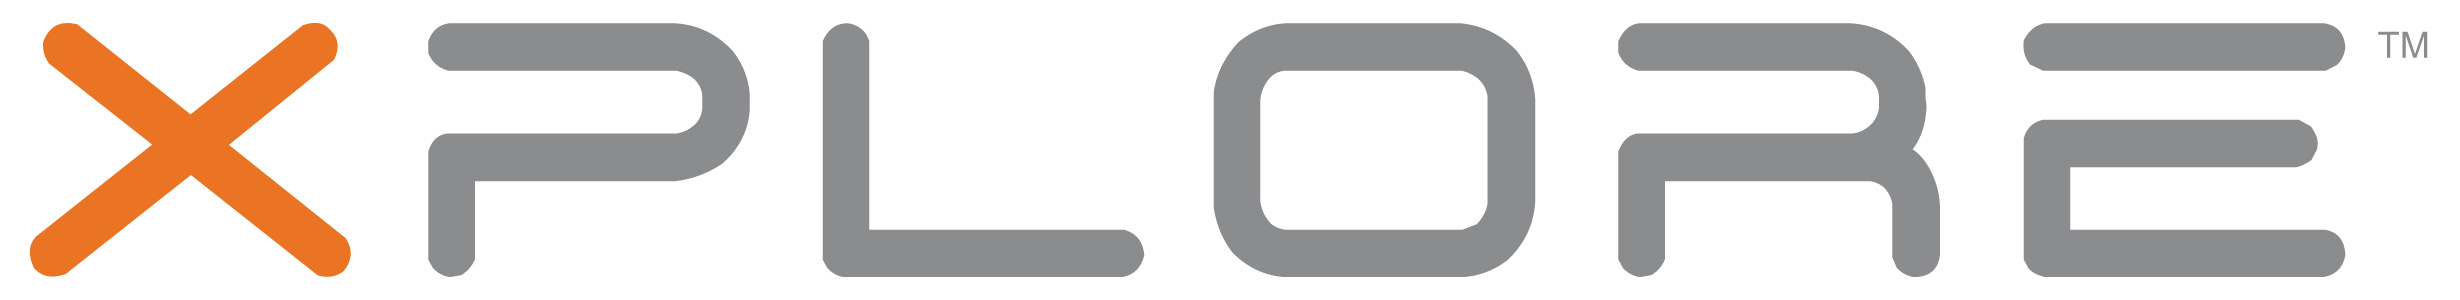 Xplore Logo 2013-AI (outlined)